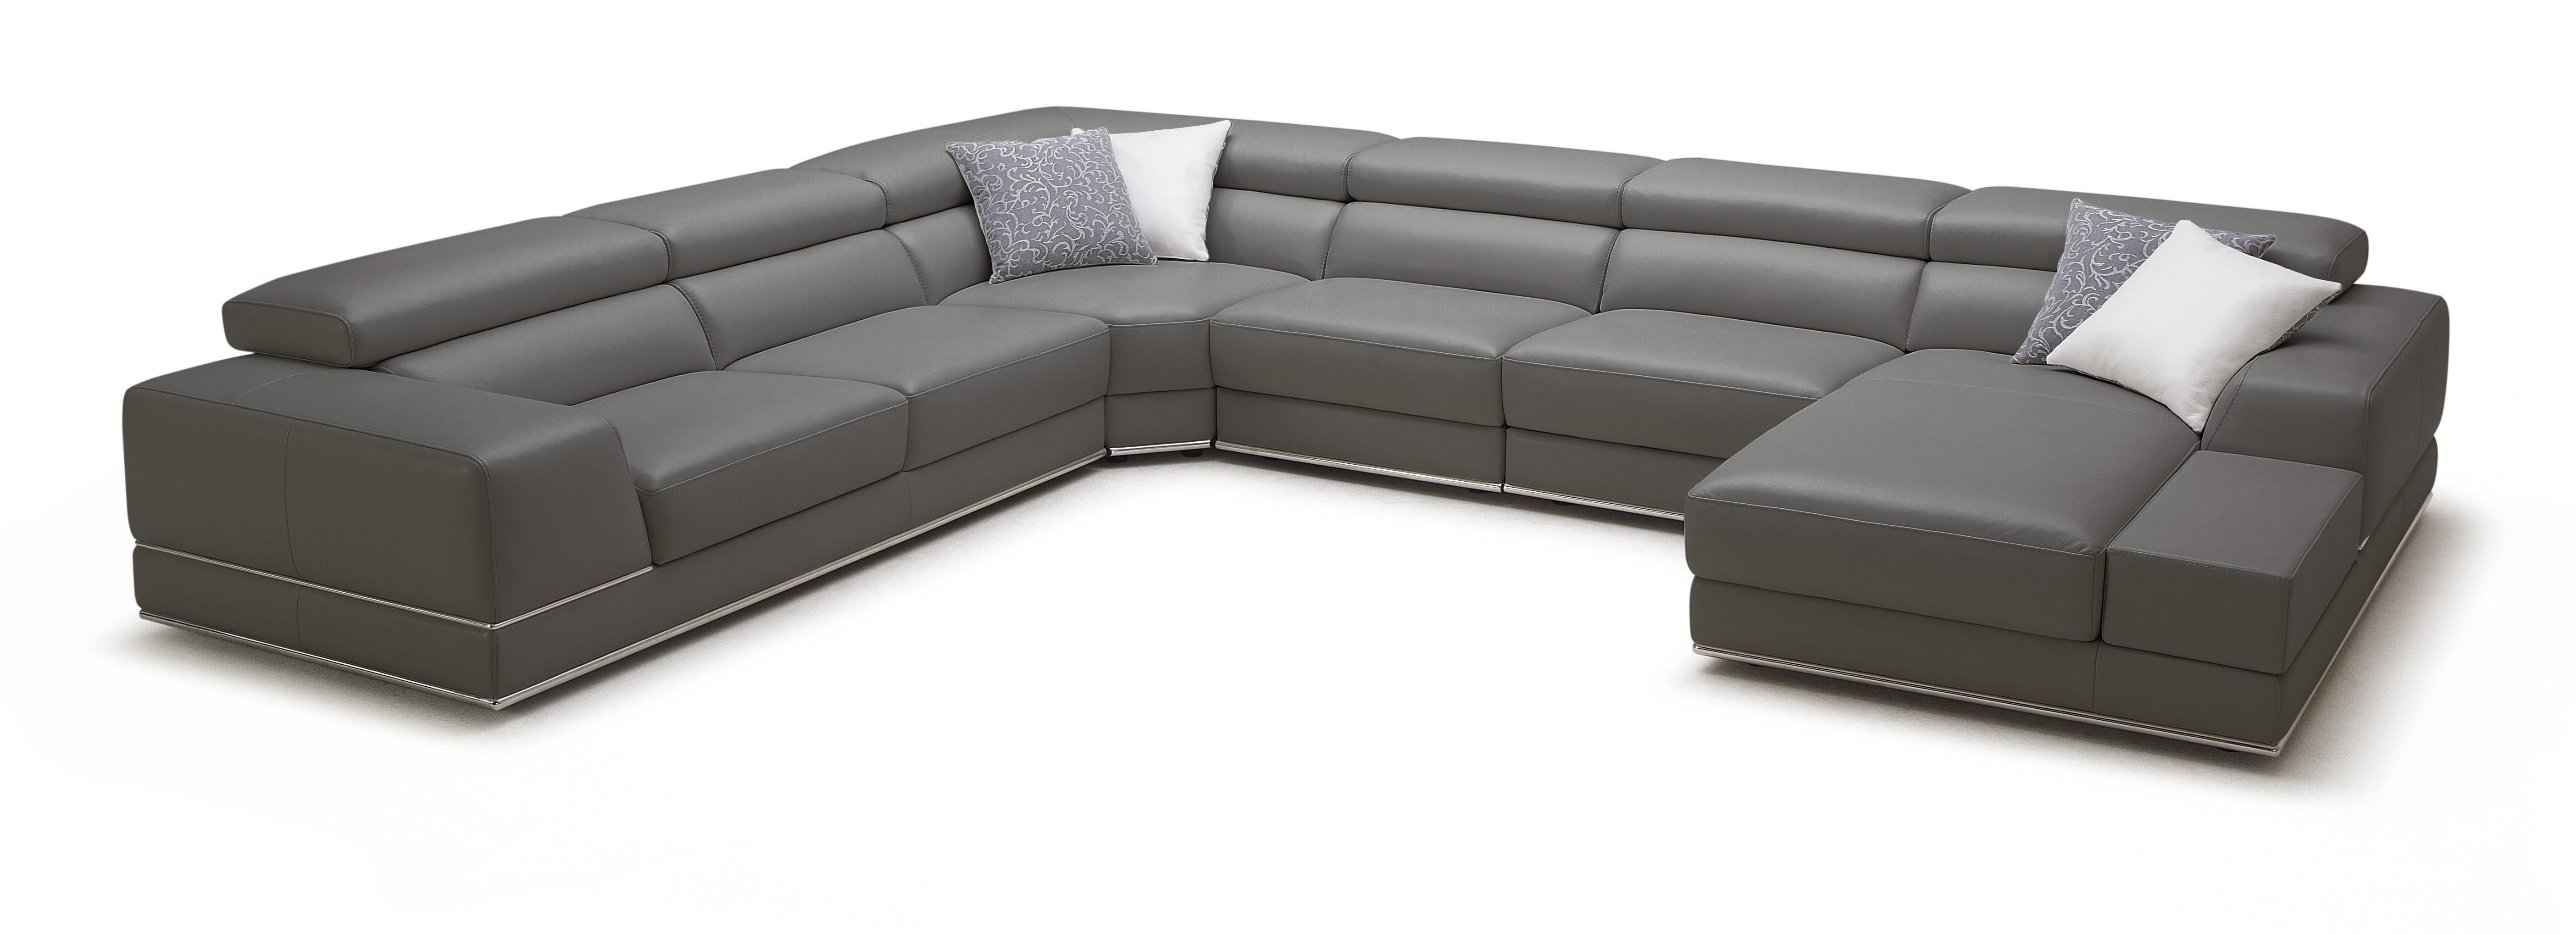 bergamo sectional leather modern sofa black